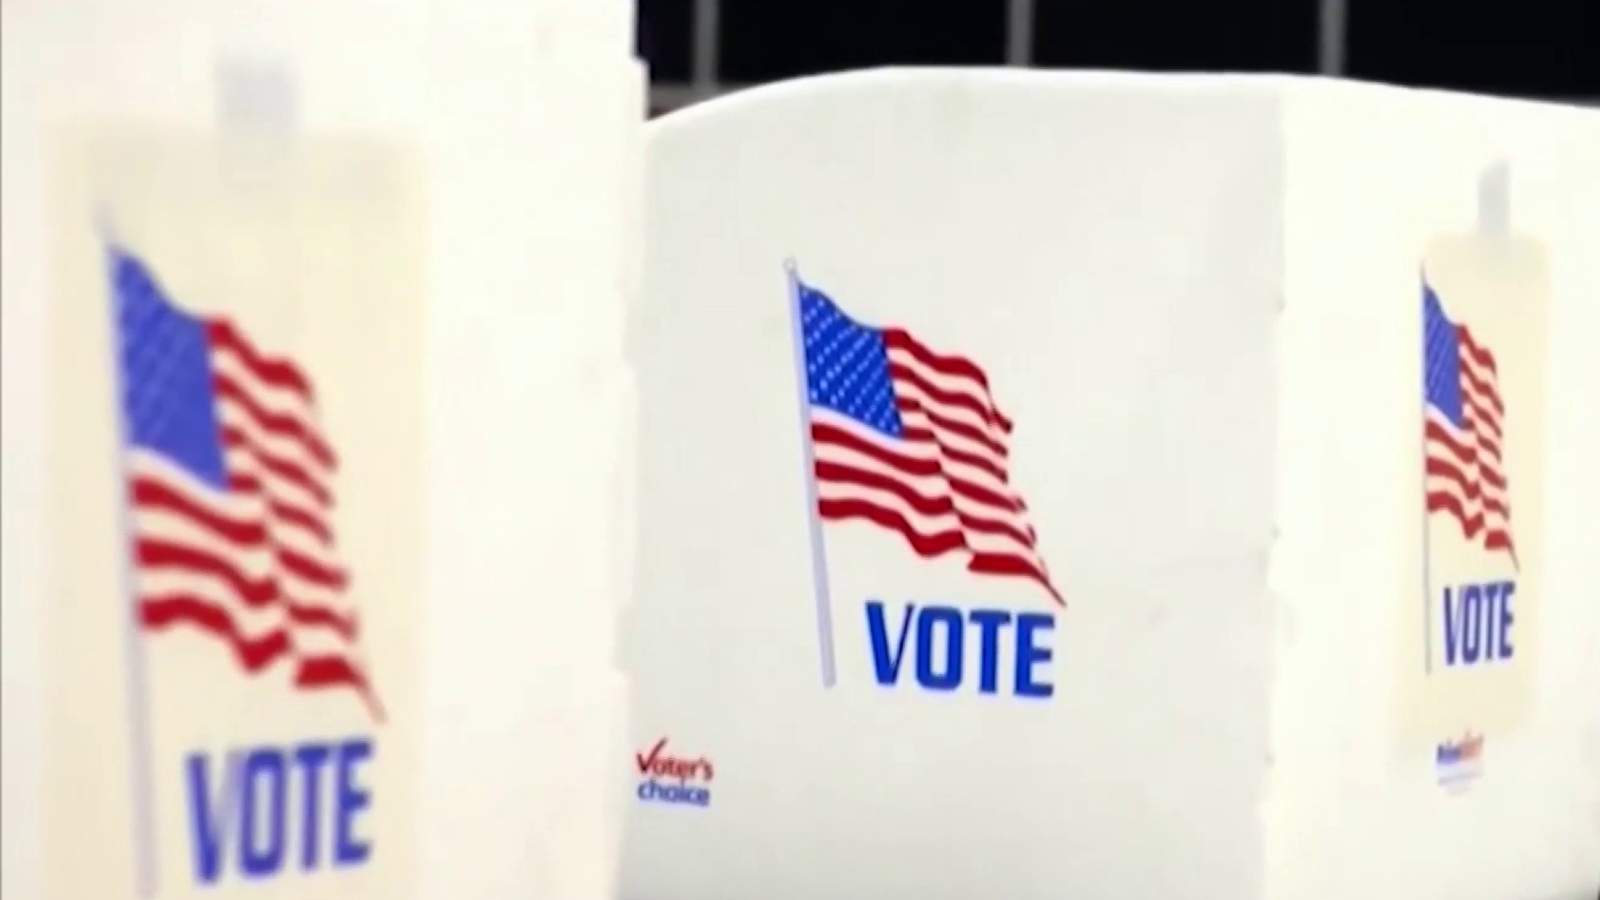 Judge extends Virginia voter registrations for 48 hours